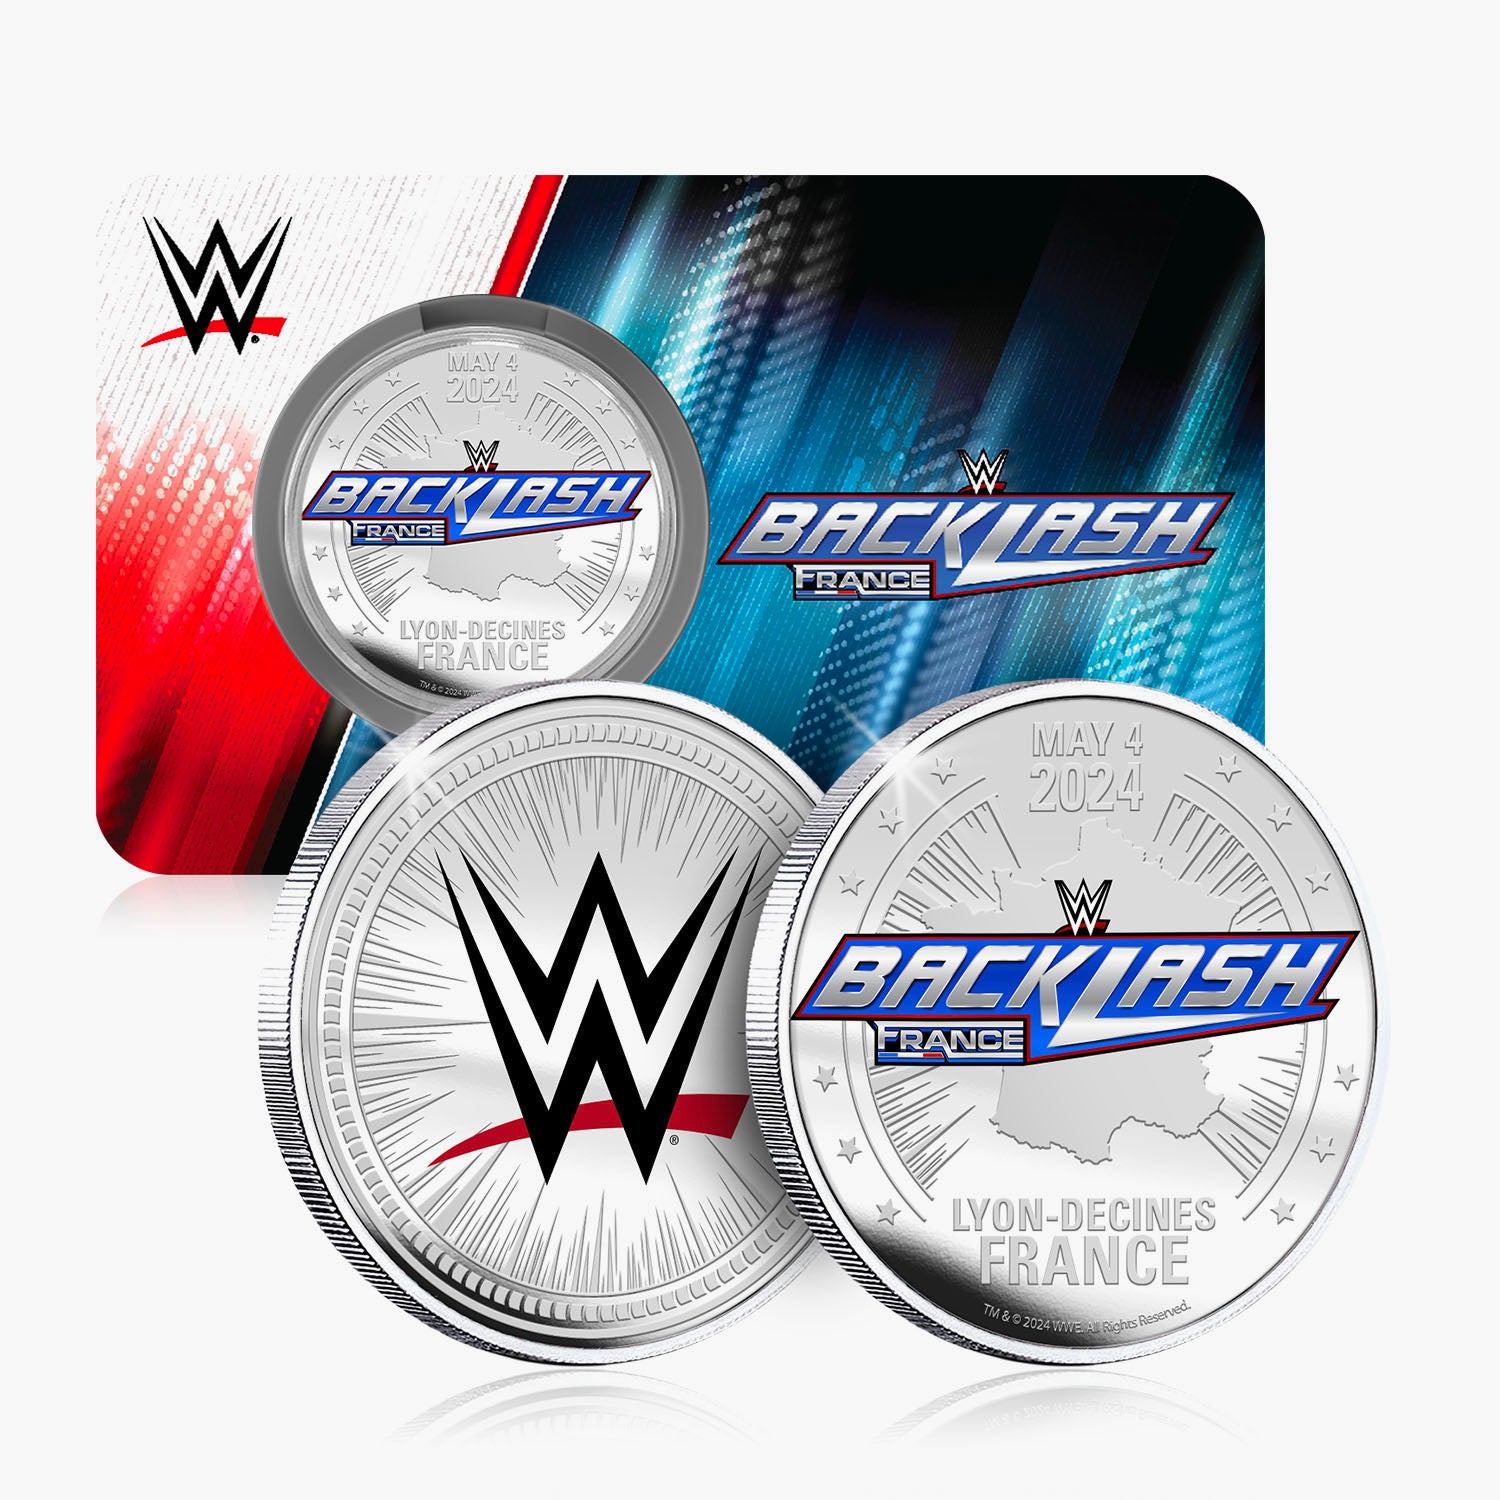 WWE Backlash Premium Live Event Commemorative